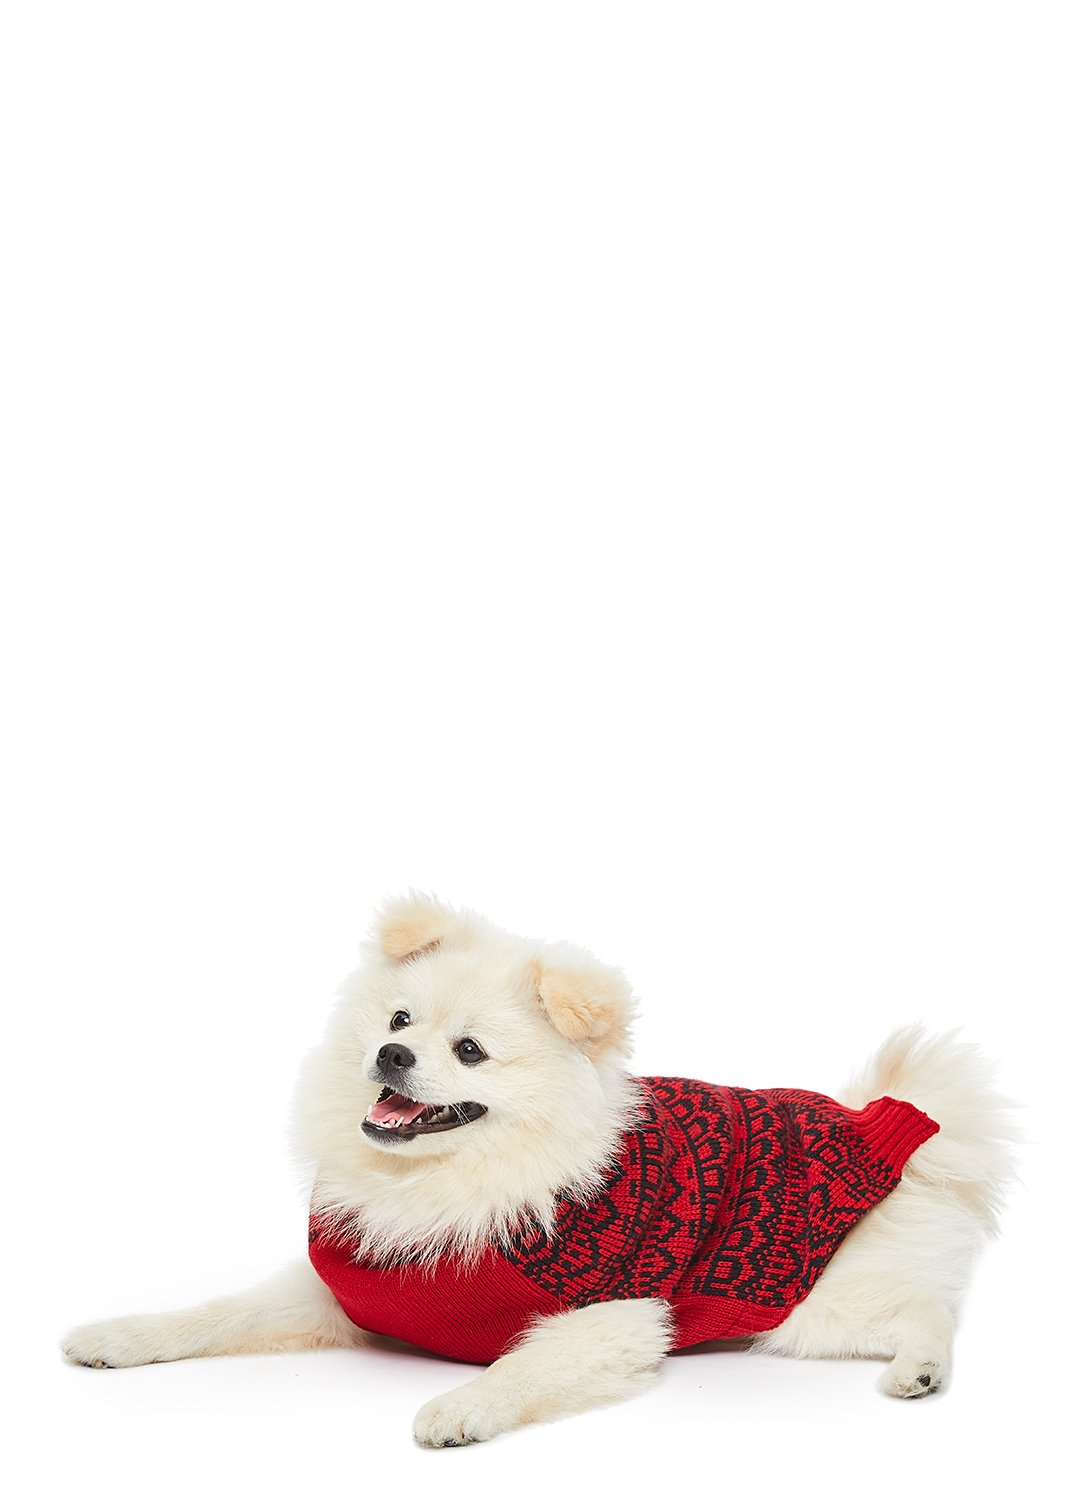 Fun Dog wearing Red Plaid Sleepwear